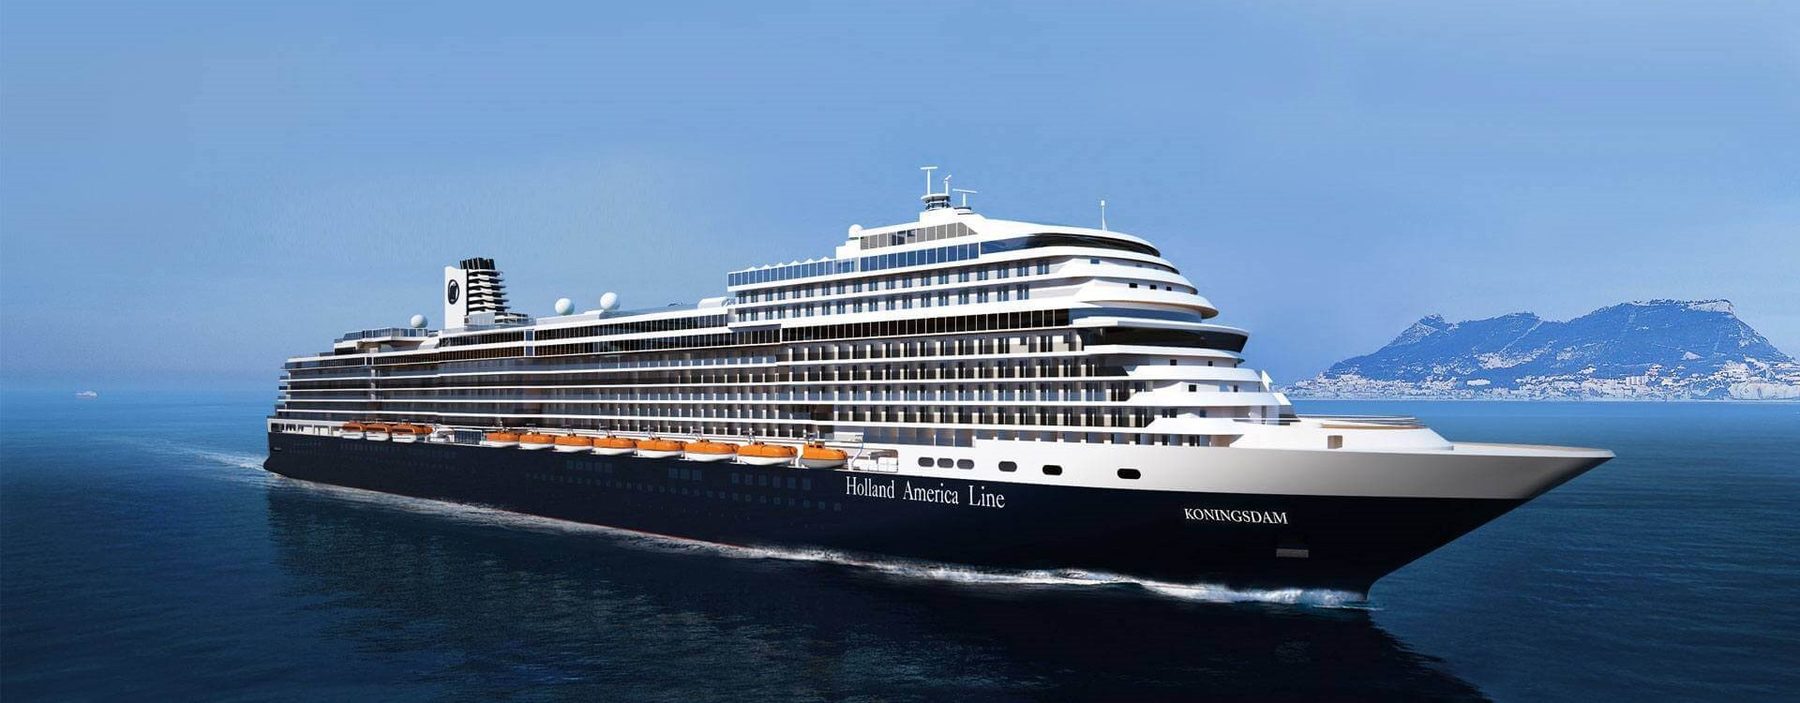 Holland America Cruise Line Koningsdam